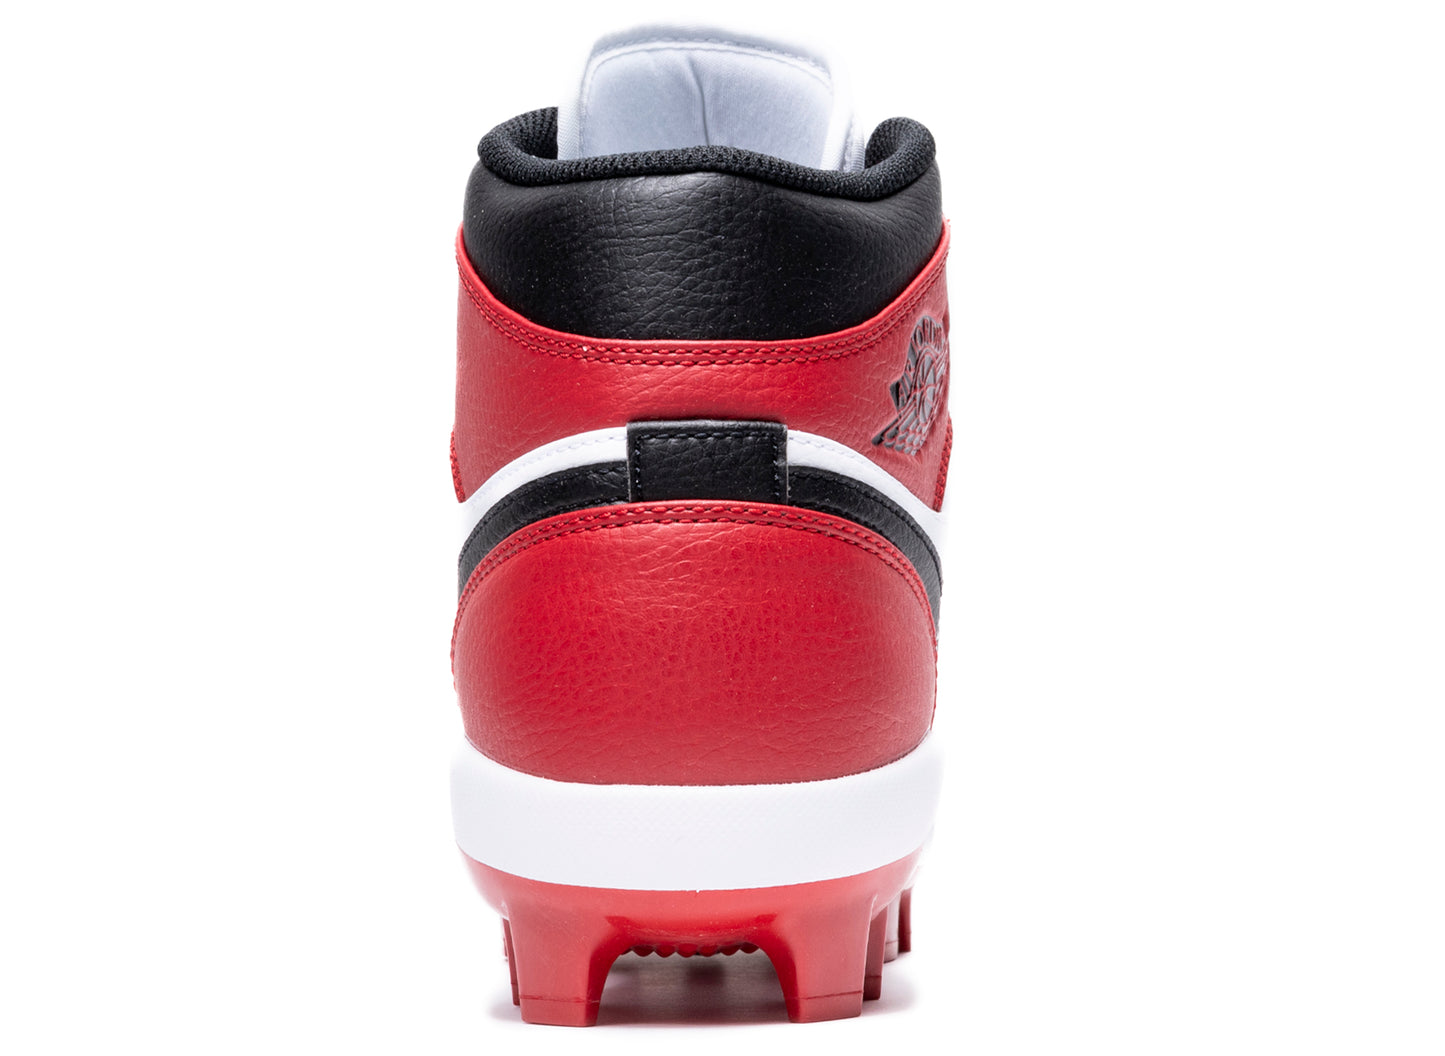 Air Jordan 1 Retro MCS Cleats